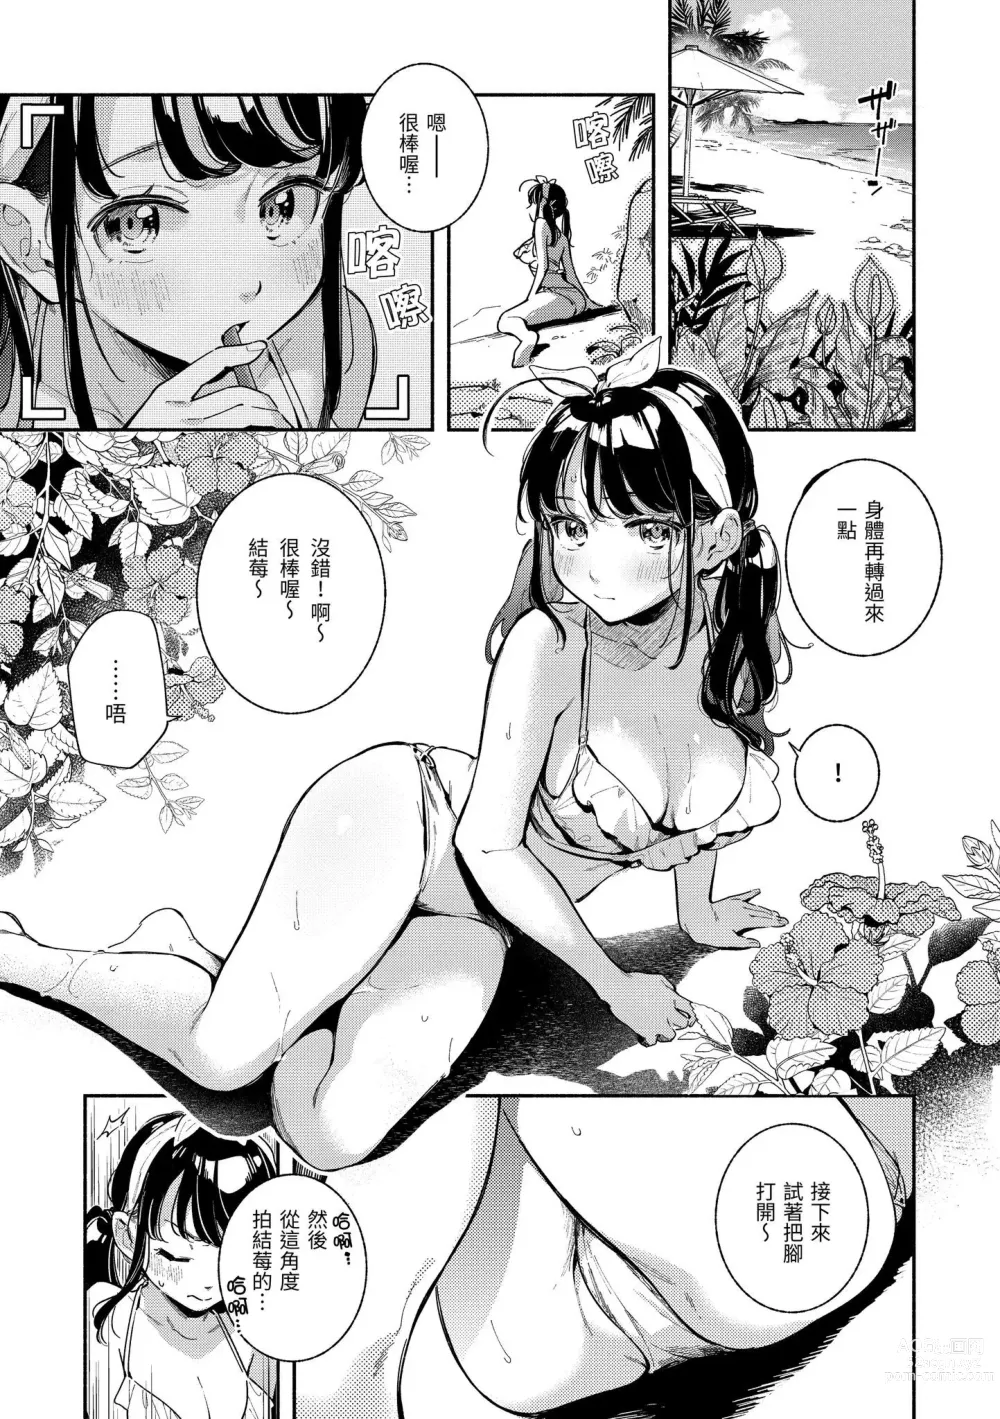 Page 6 of manga 謝謝招待